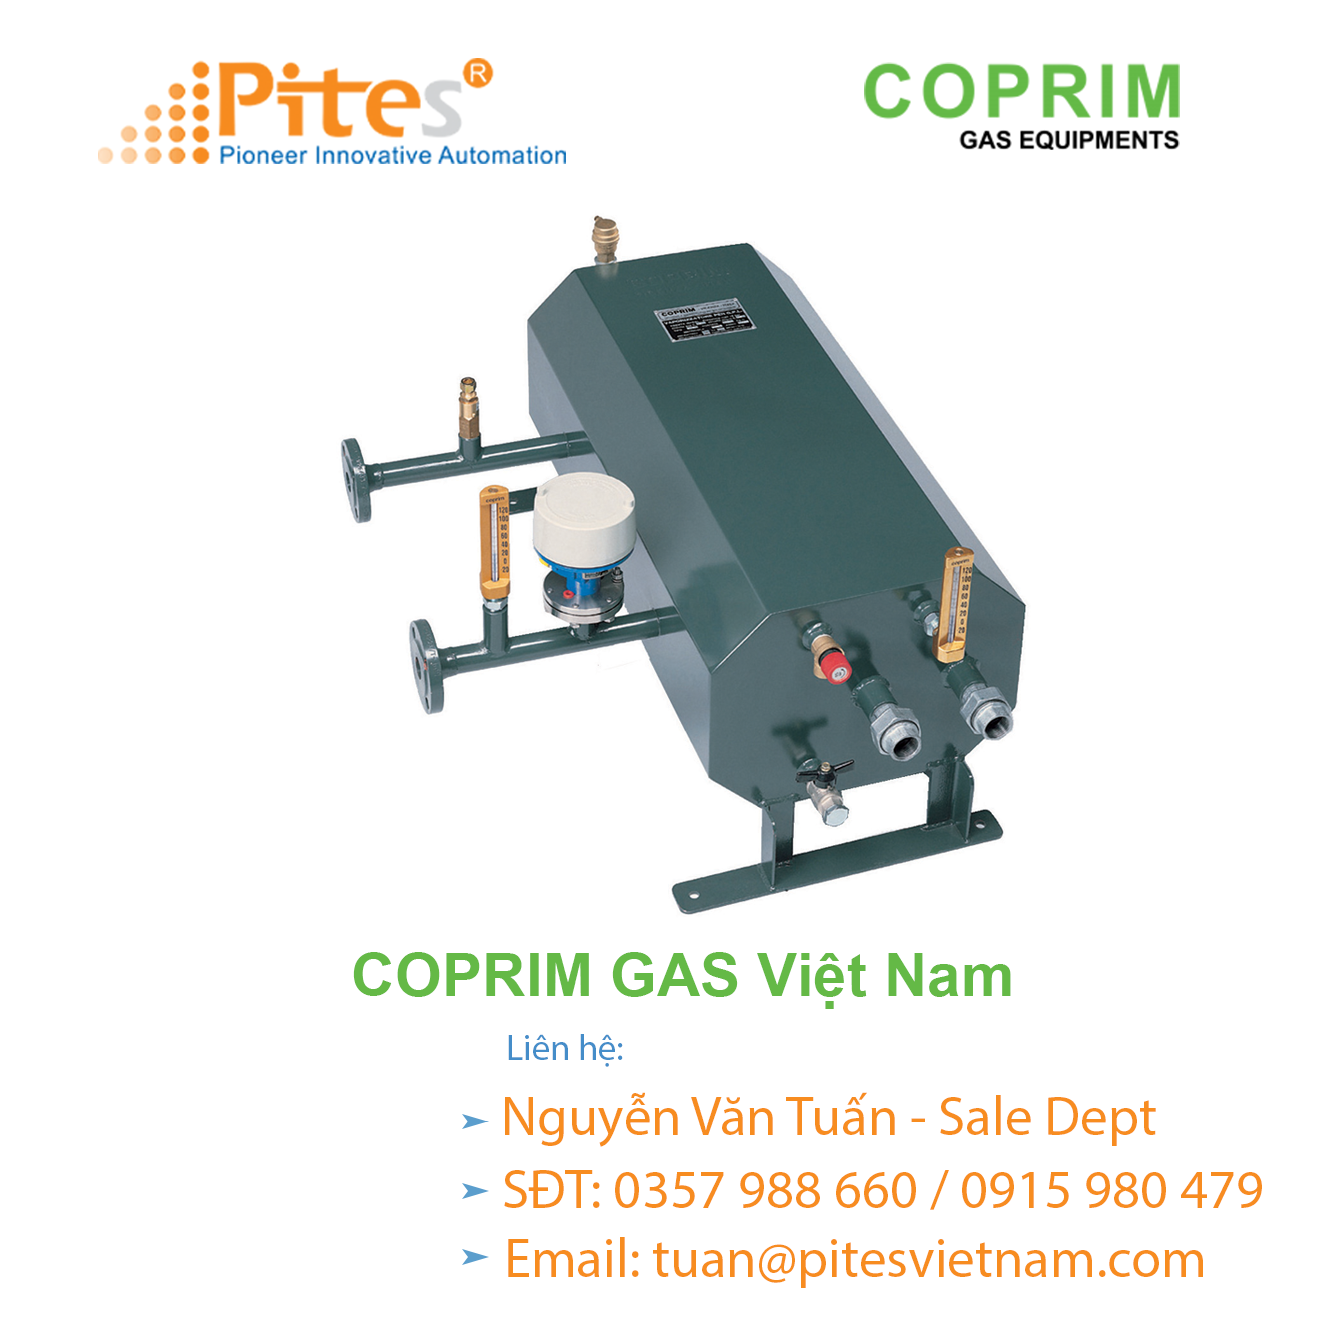 coprim-gas-vietnam-coprim-gas-viet-nam-dai-ly-coprim-gas-list-code-coprim-gas-part-2.png